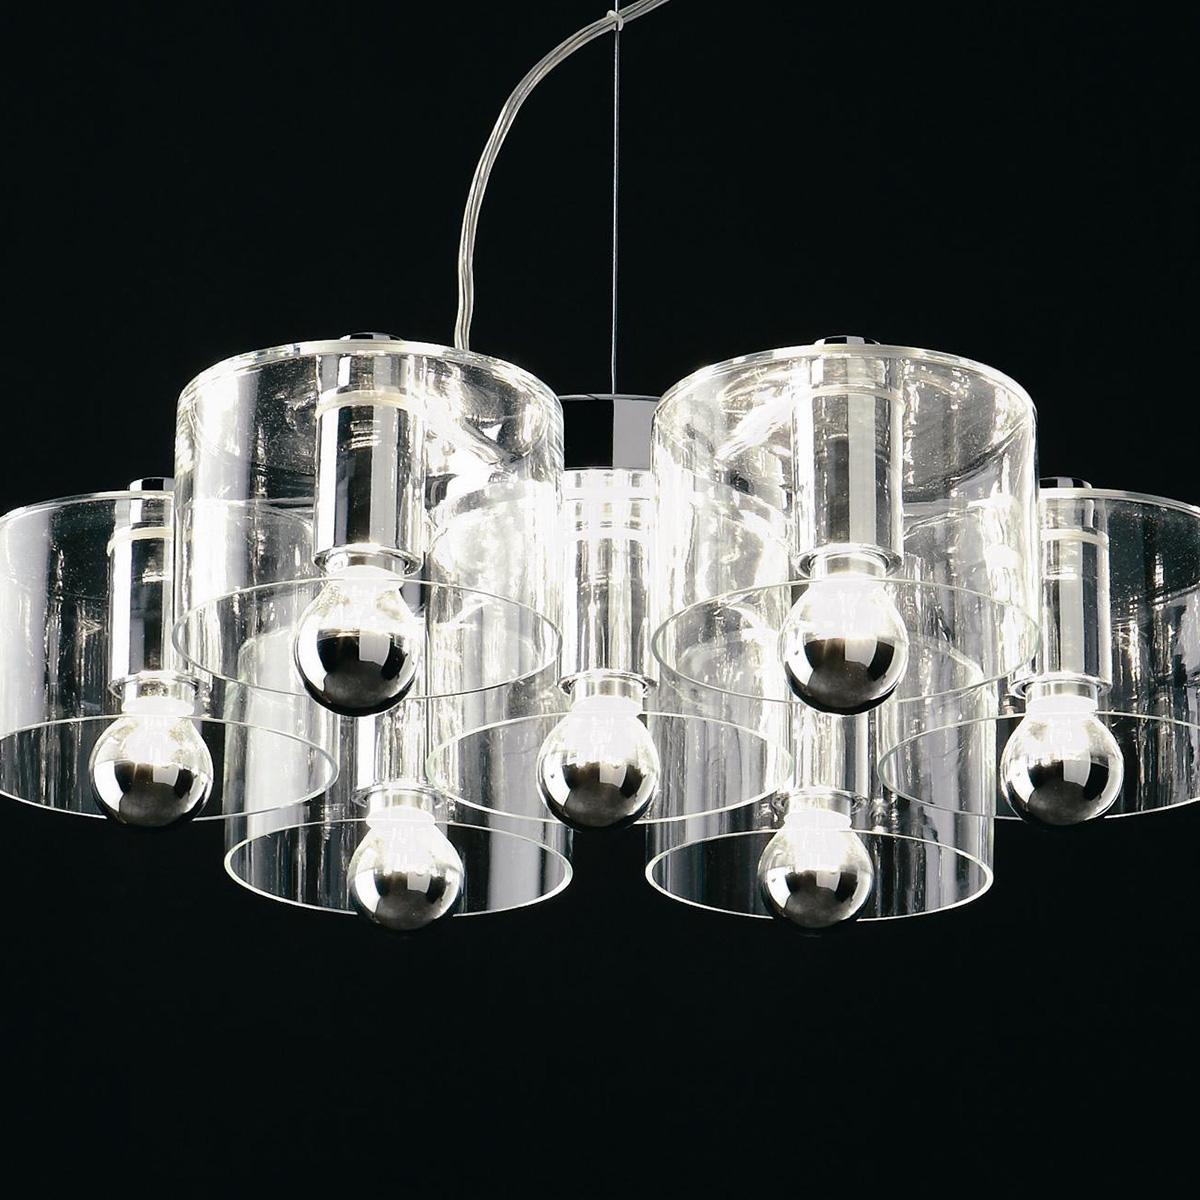 Mid-Century Modern Marta Laudani & MarCo Romanelli Suspension Lamp 'Fiore' 423 by Oluce For Sale